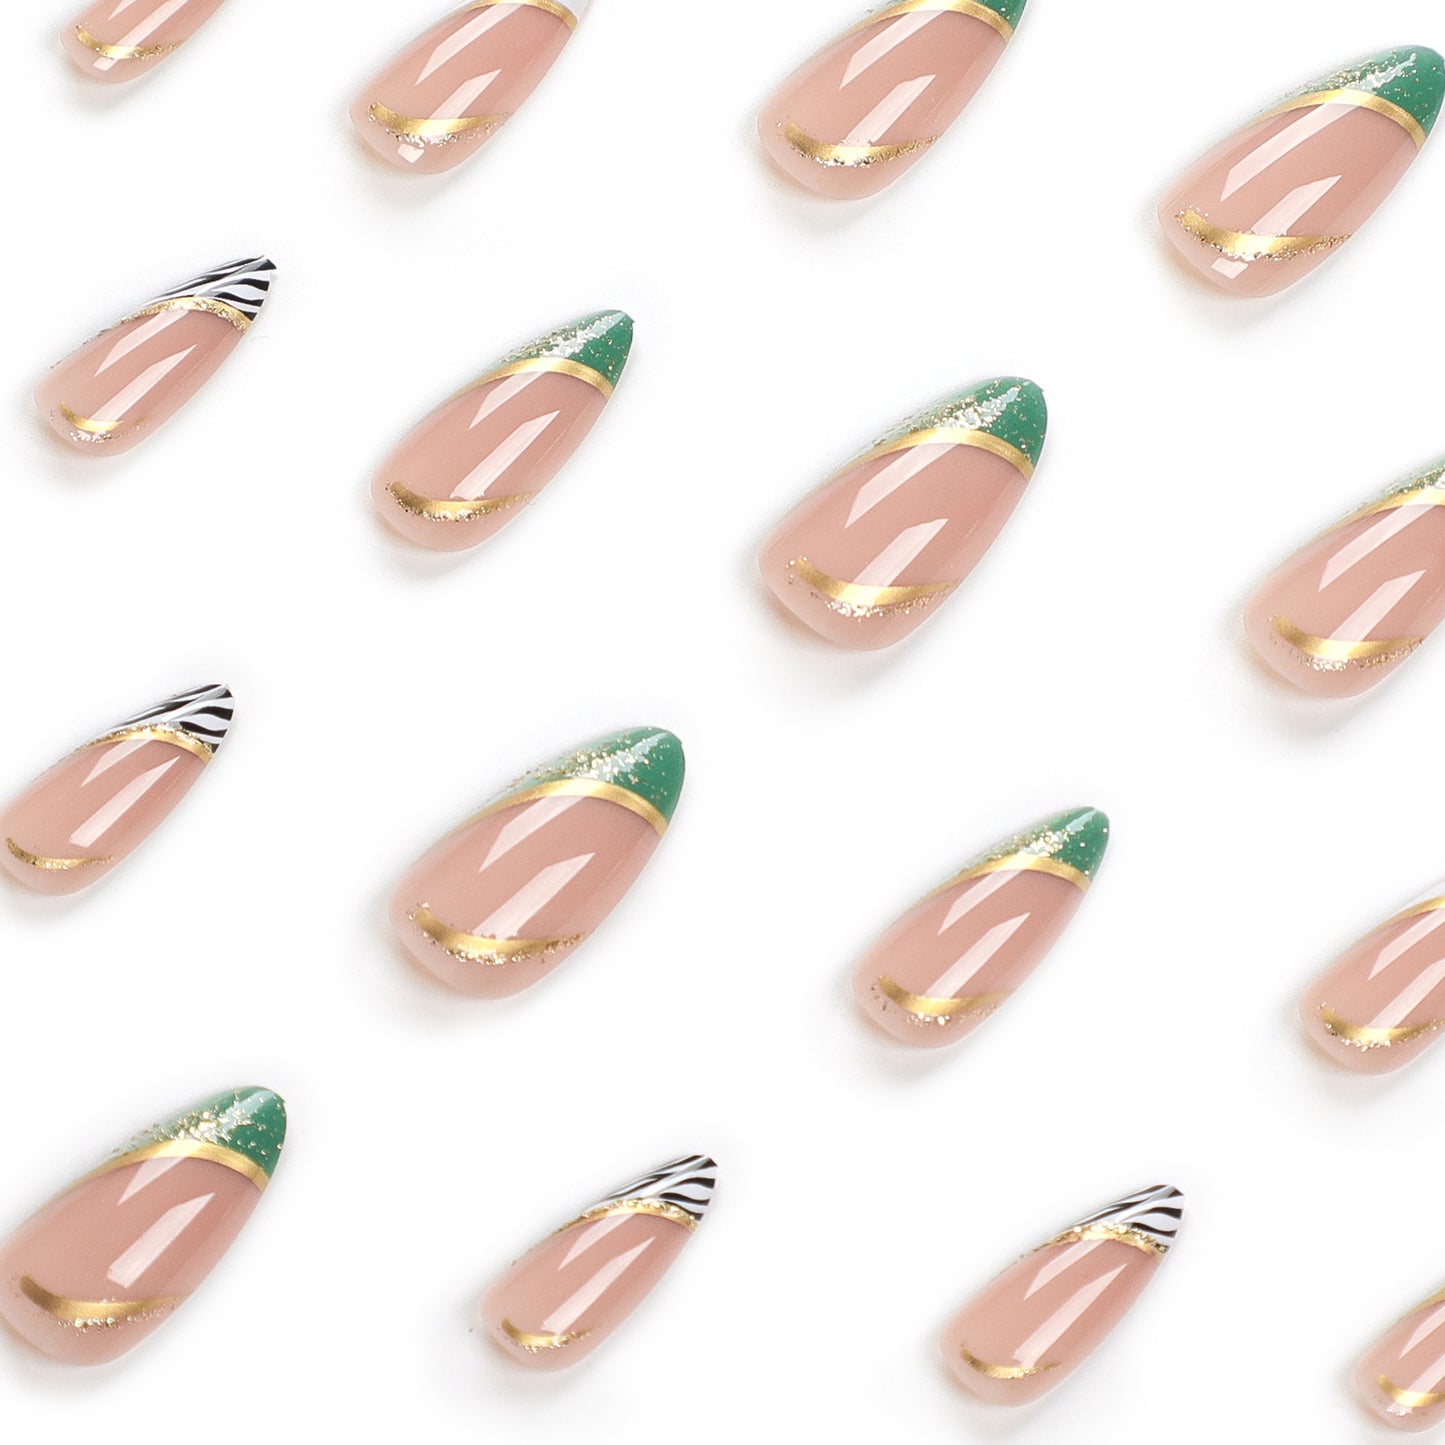 Popular style Press on Nail false nails for women gift OEM customized Logo Mamufacturer